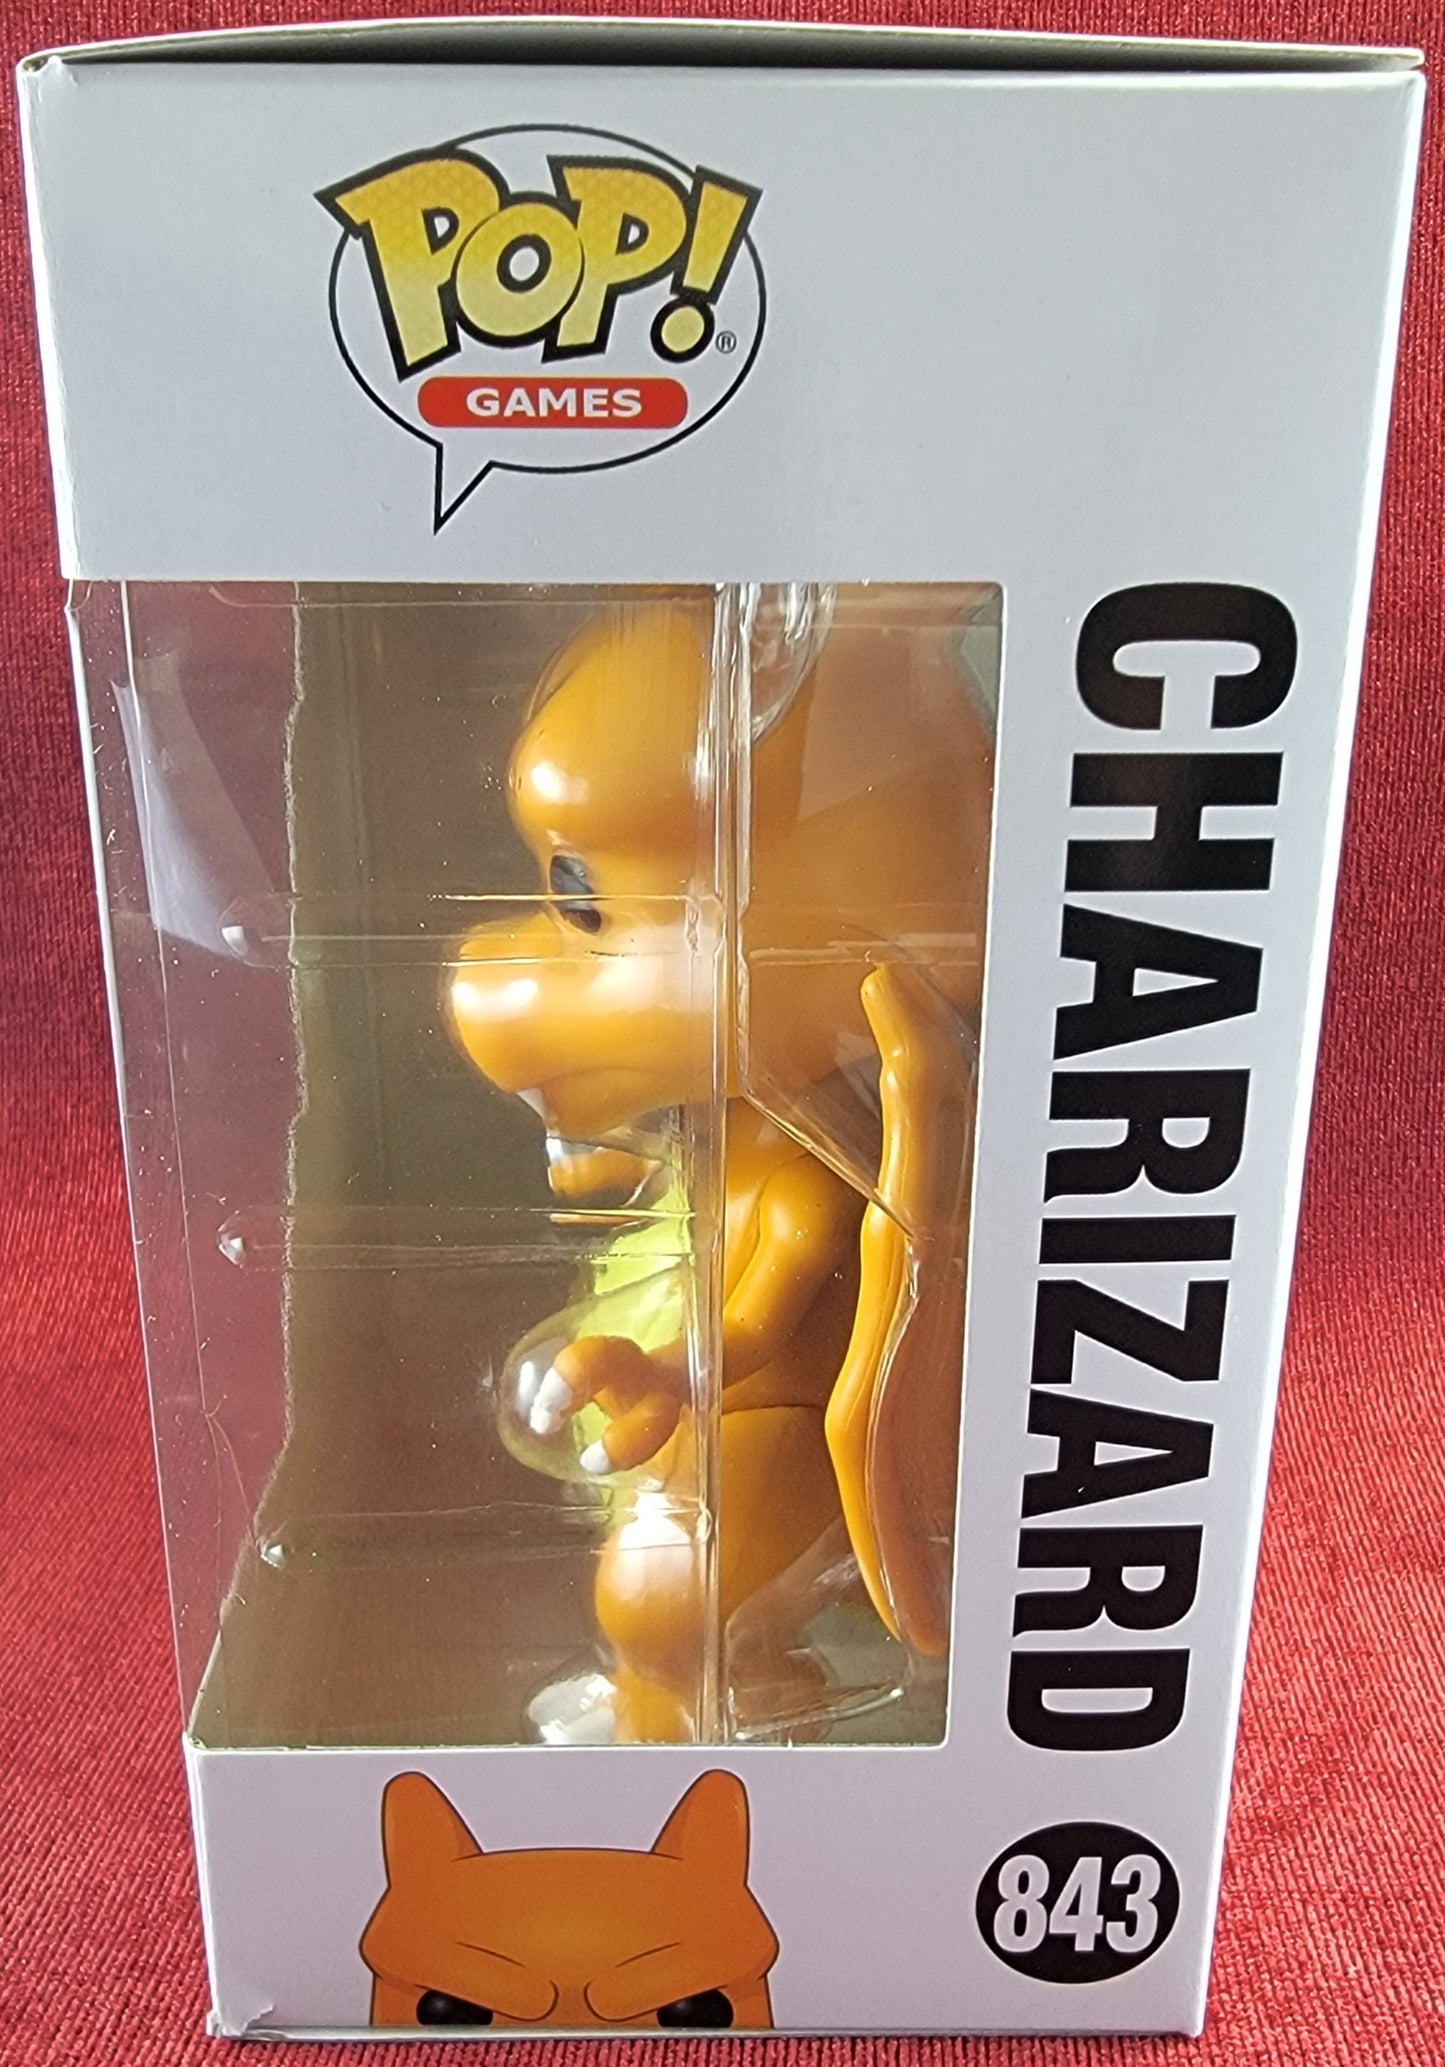 Charizard funko # 843 (nib)
With pop protector